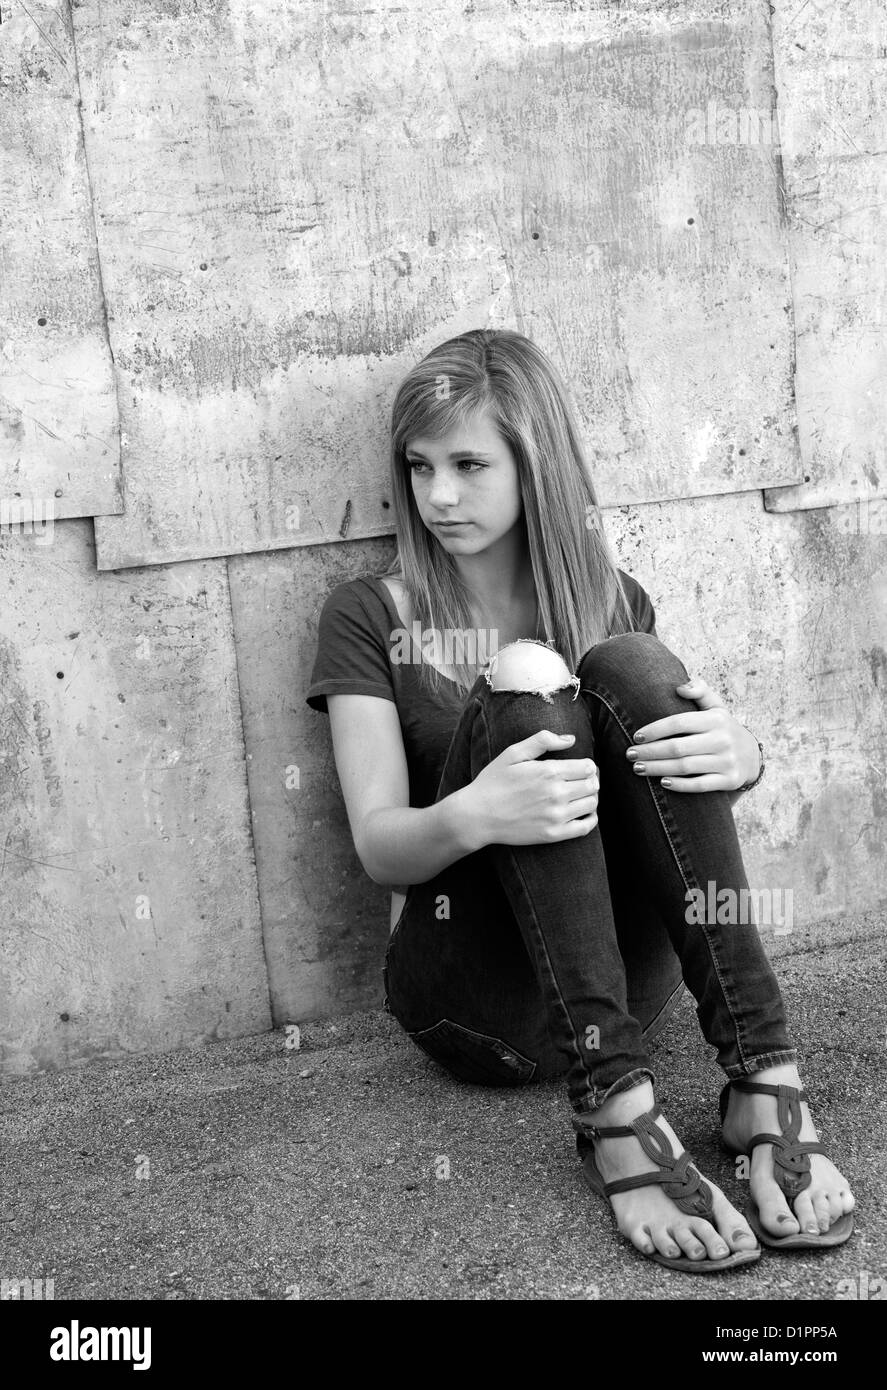 Sad teenage girl sitting on the ground in alleyway. Stock Photo